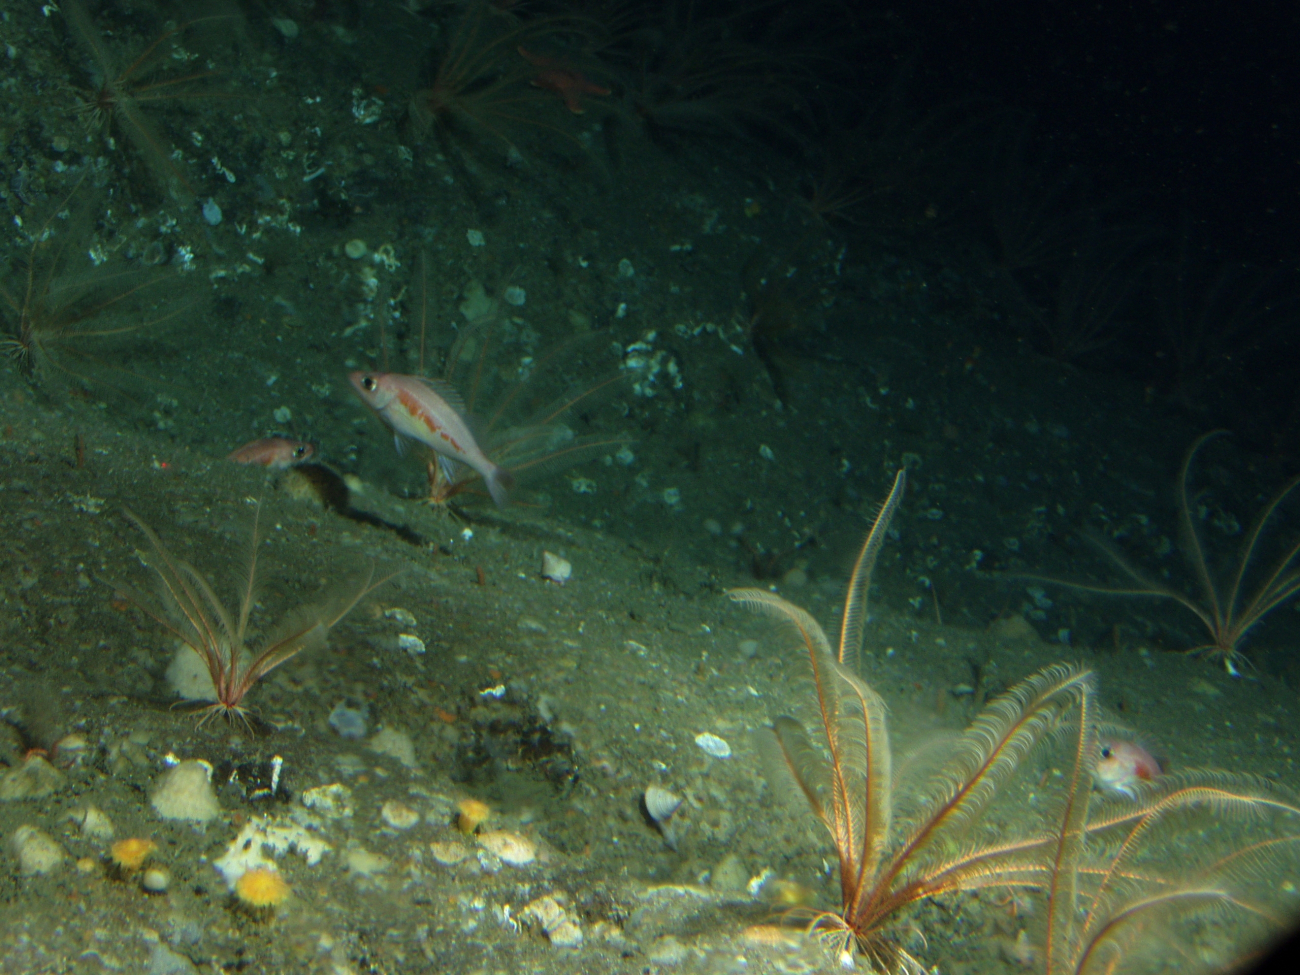 Pygmy  rockfish (Sebastes wilsoni) and feathered crinoids(Florometra serratissima) in boulder habitat at 74 meters depth